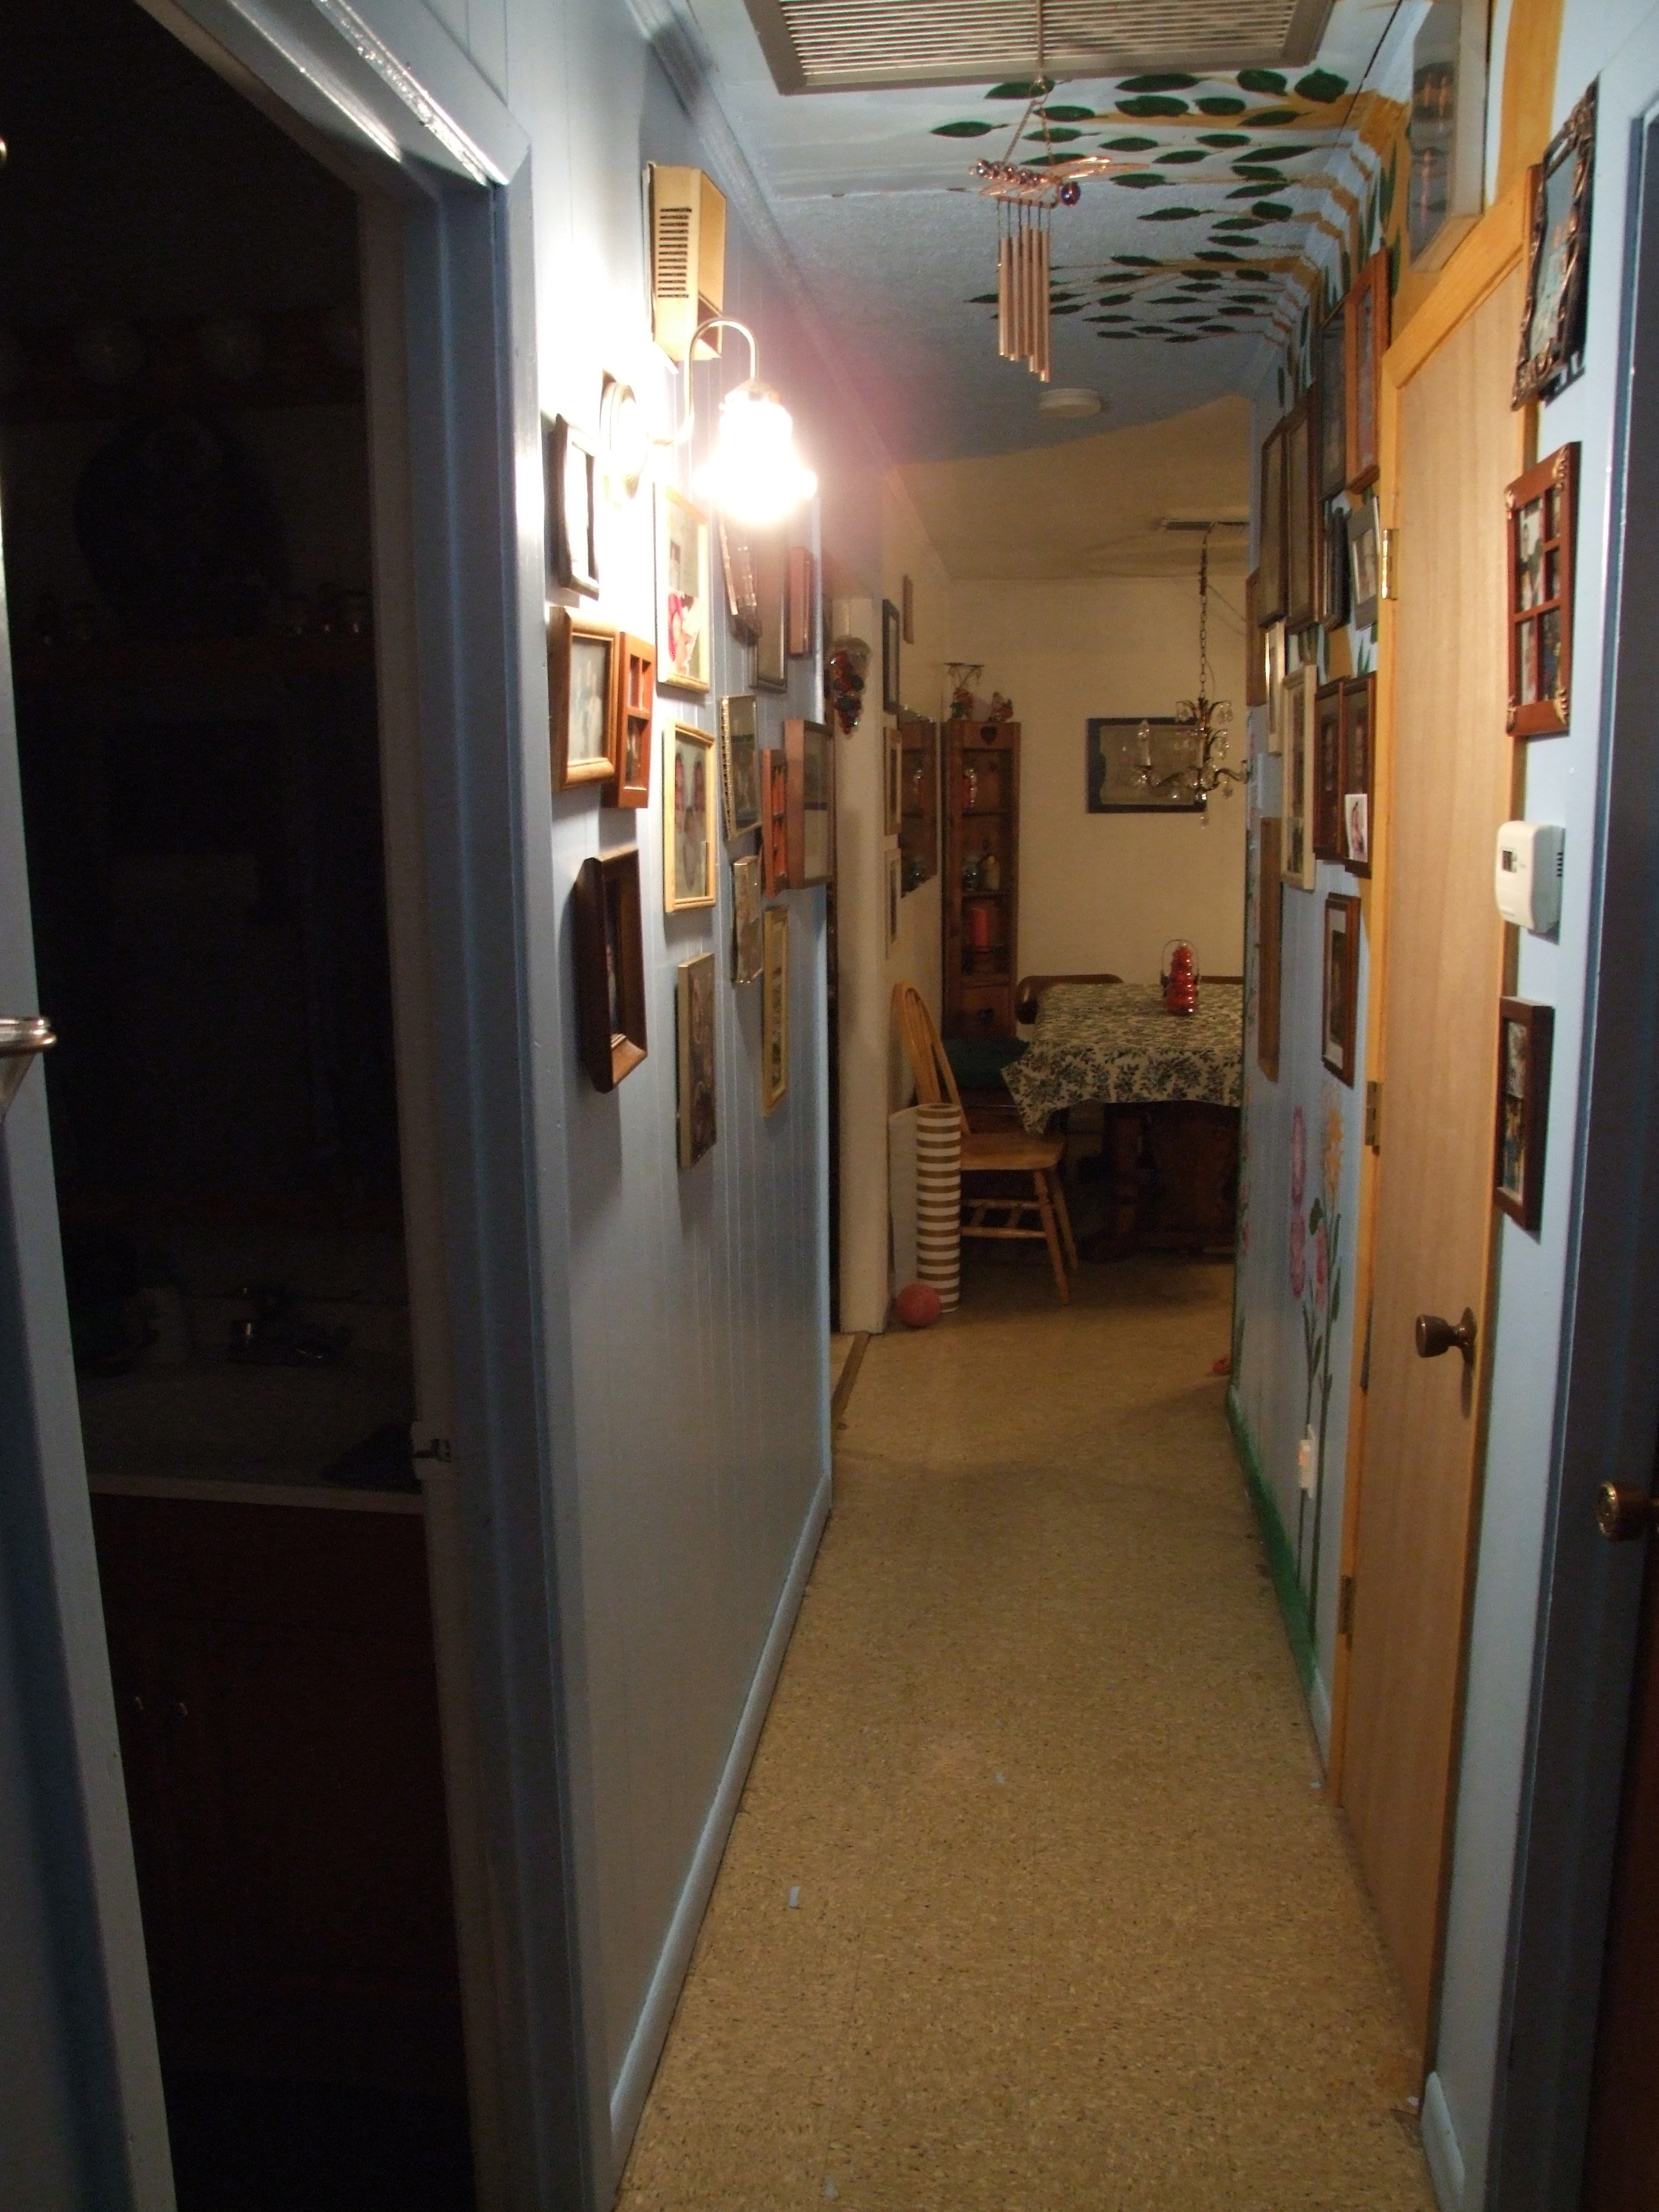  Hallway